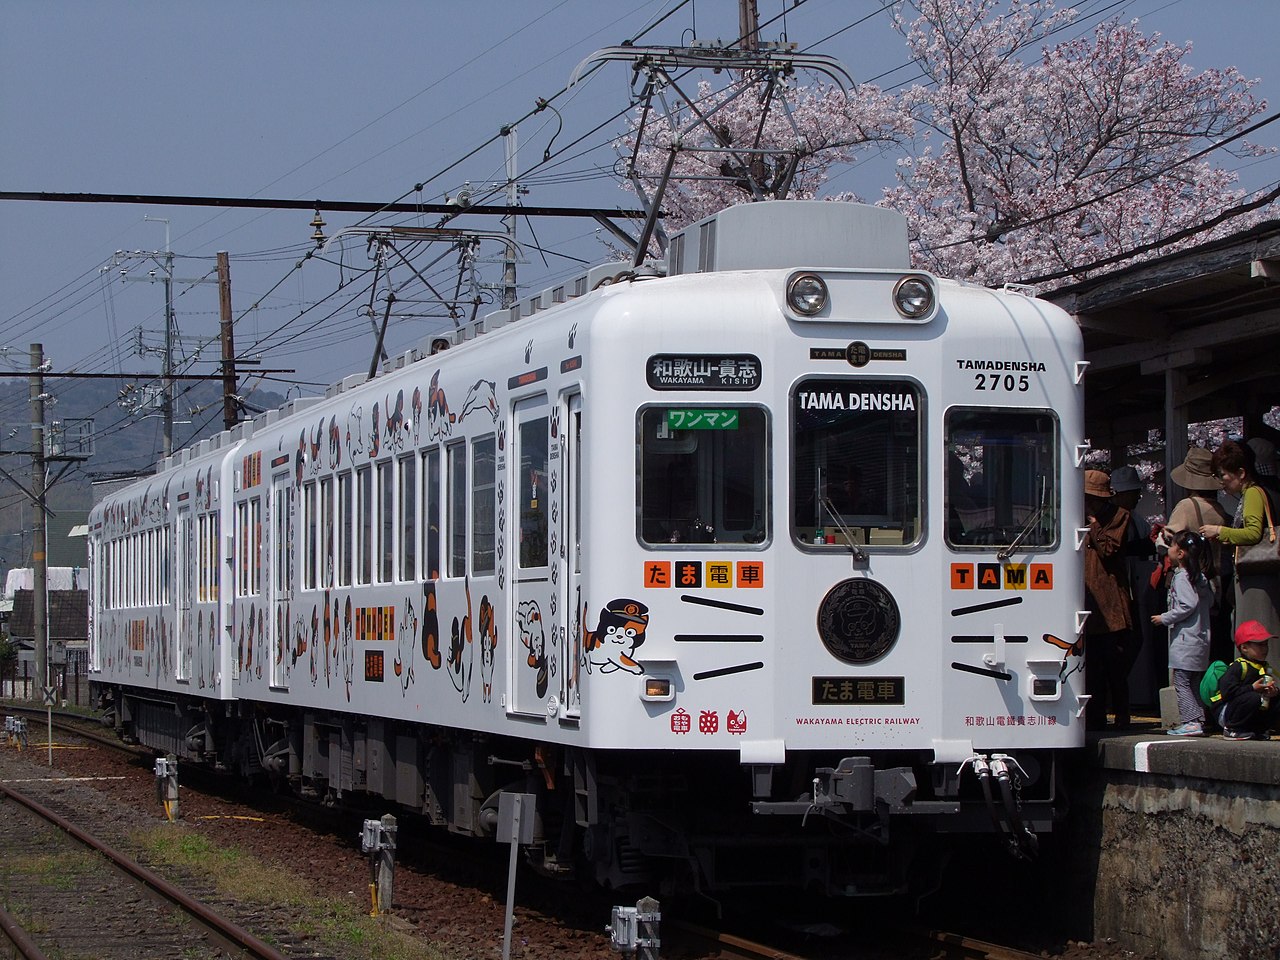 Le train "Tama Densha" en 2009 - Cultea